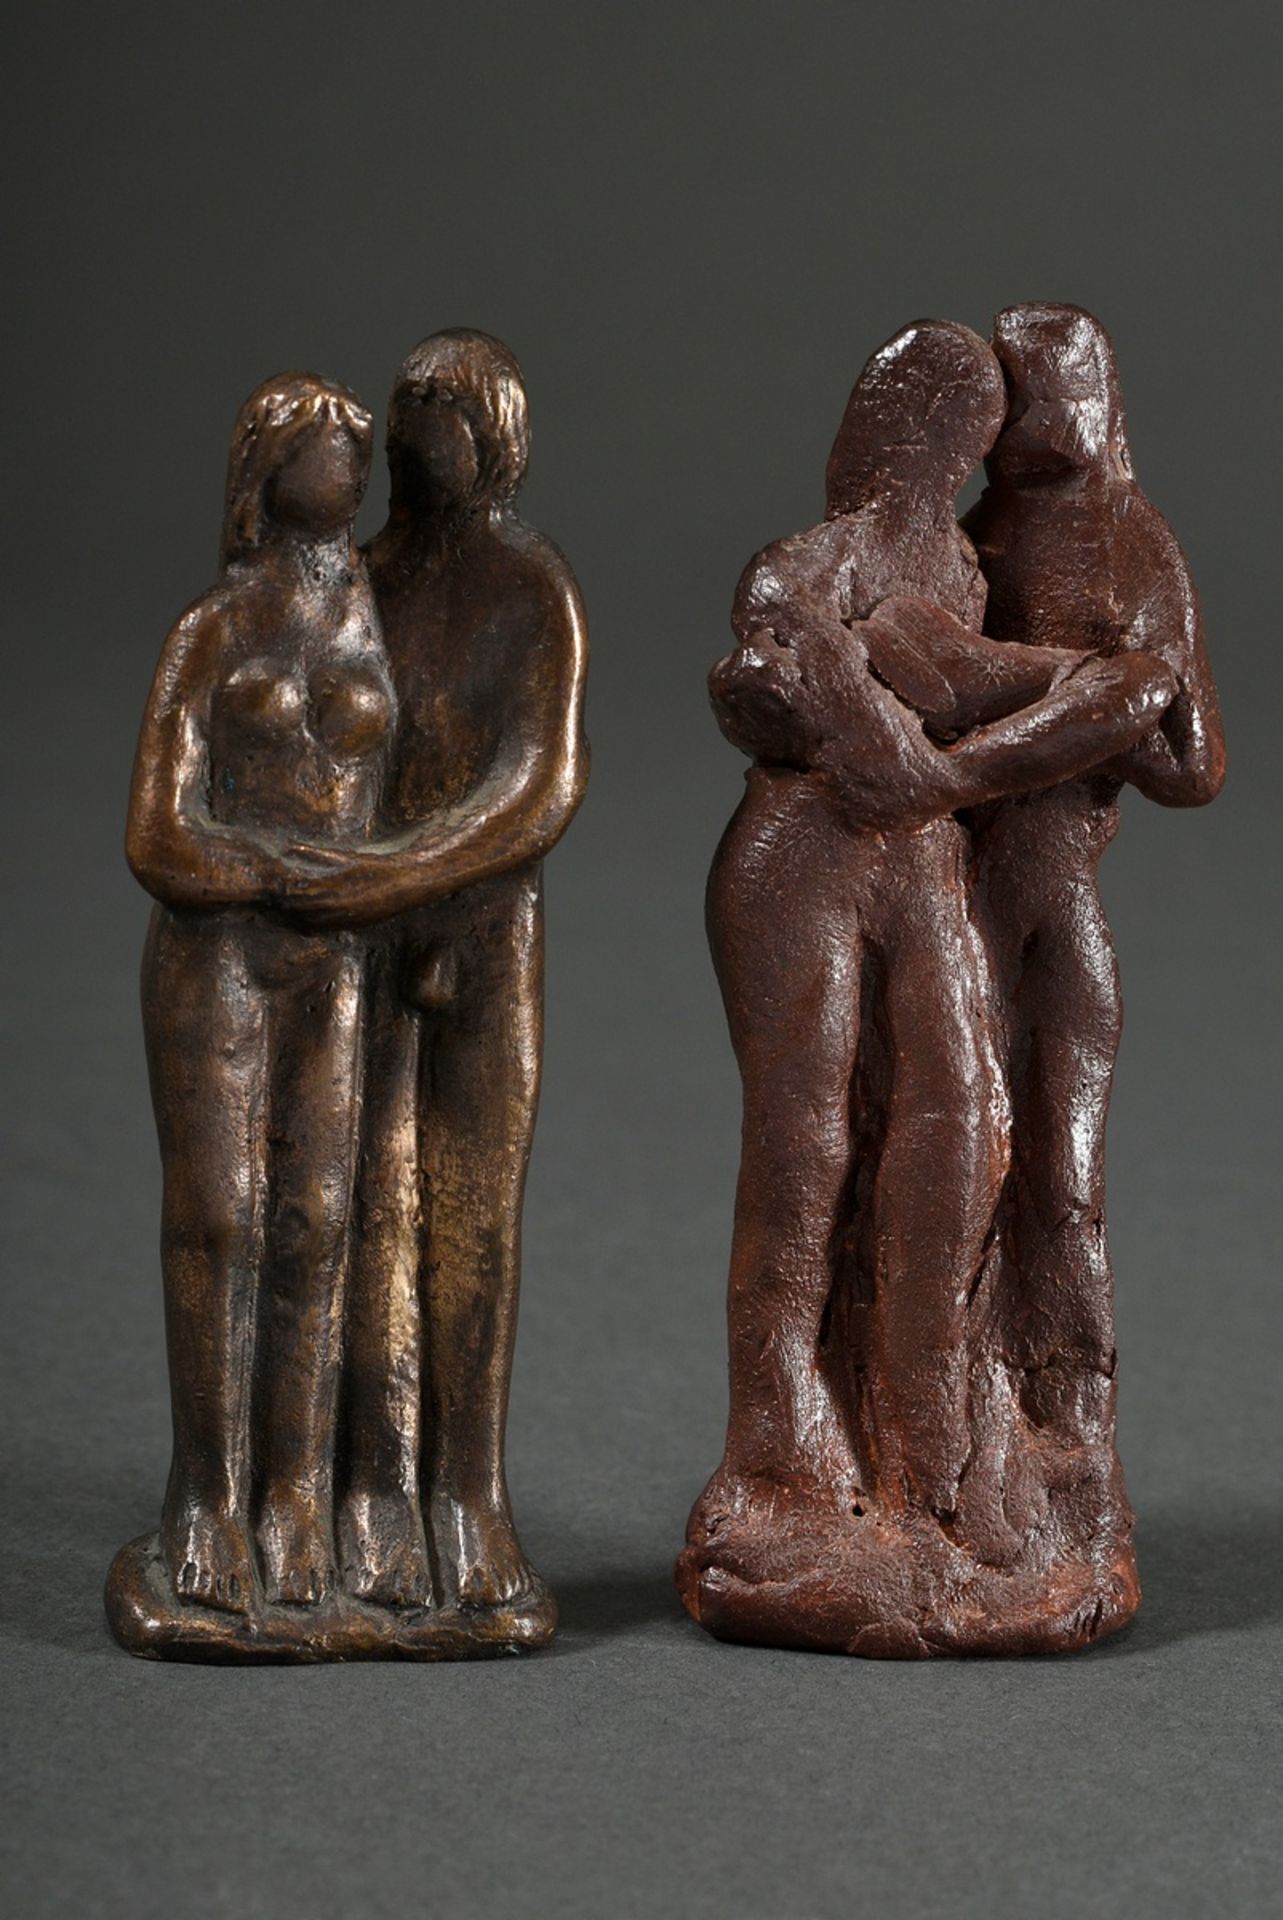 2 Various Maetzel, Monika (1917-2010) figures "Adam and Eve", bronze/reddish clay (bozzetto), monog